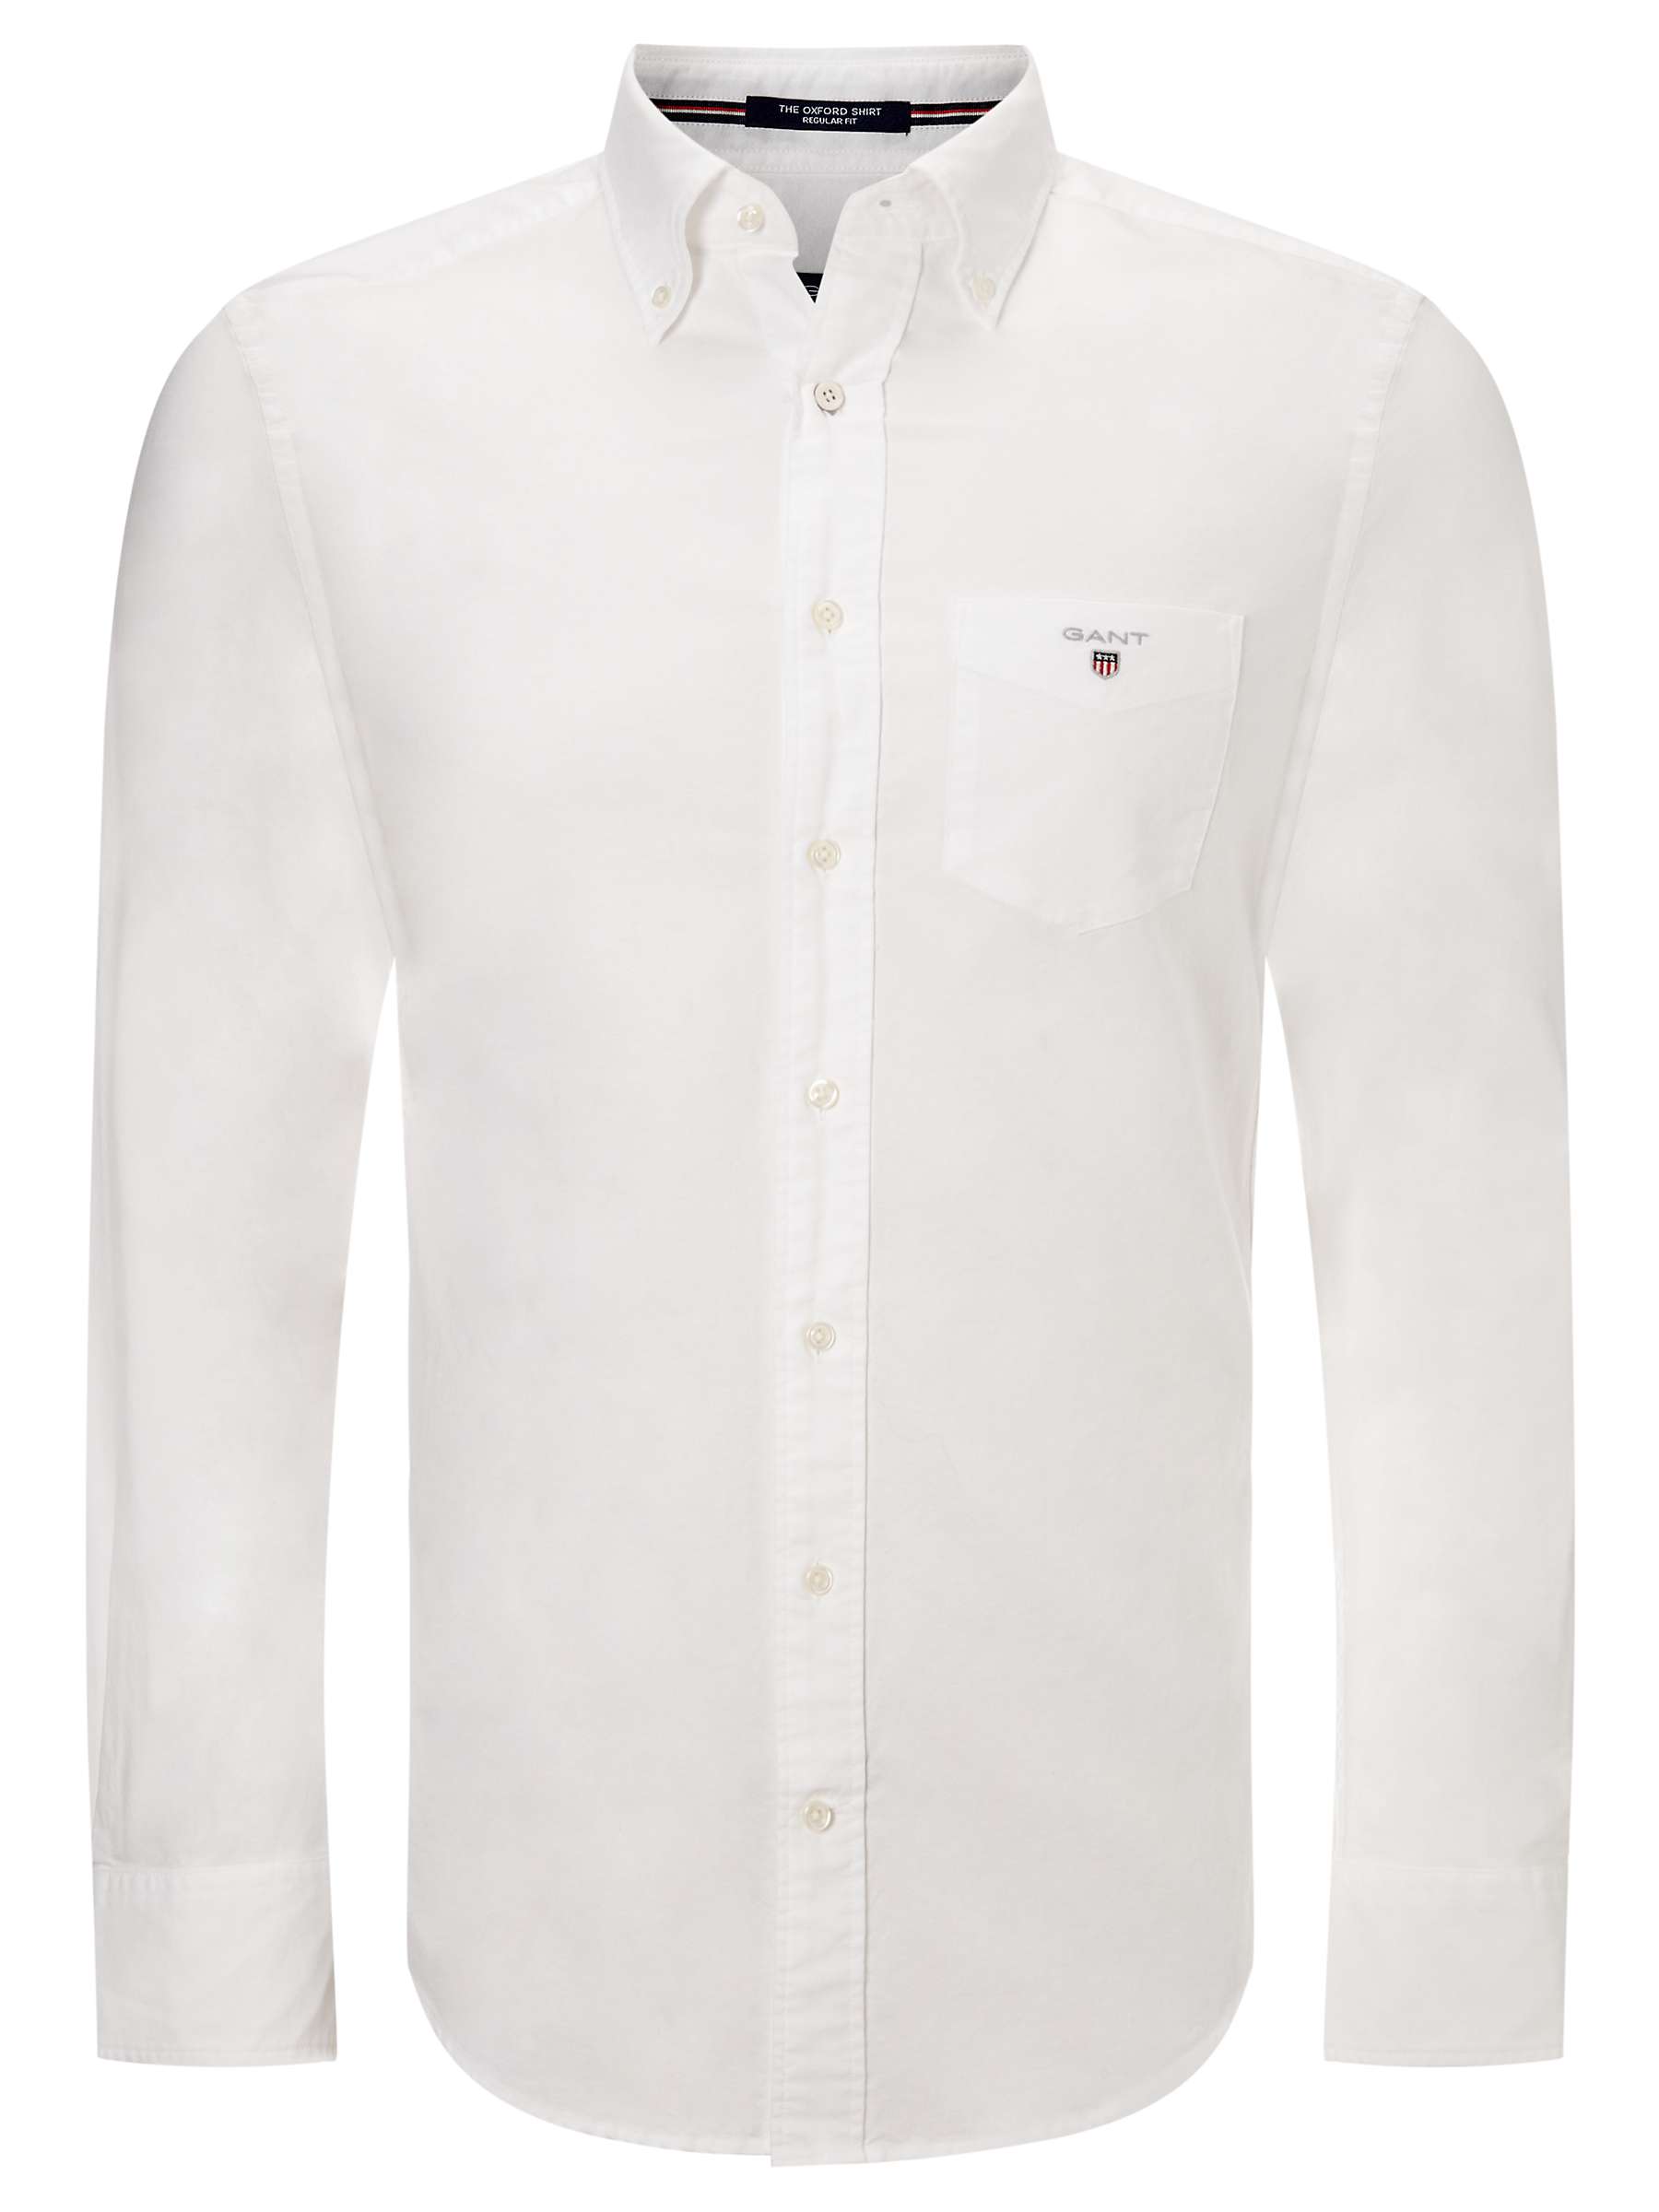 Buy GANT Regular Fit Plain Oxford Shirt Online at johnlewis.com